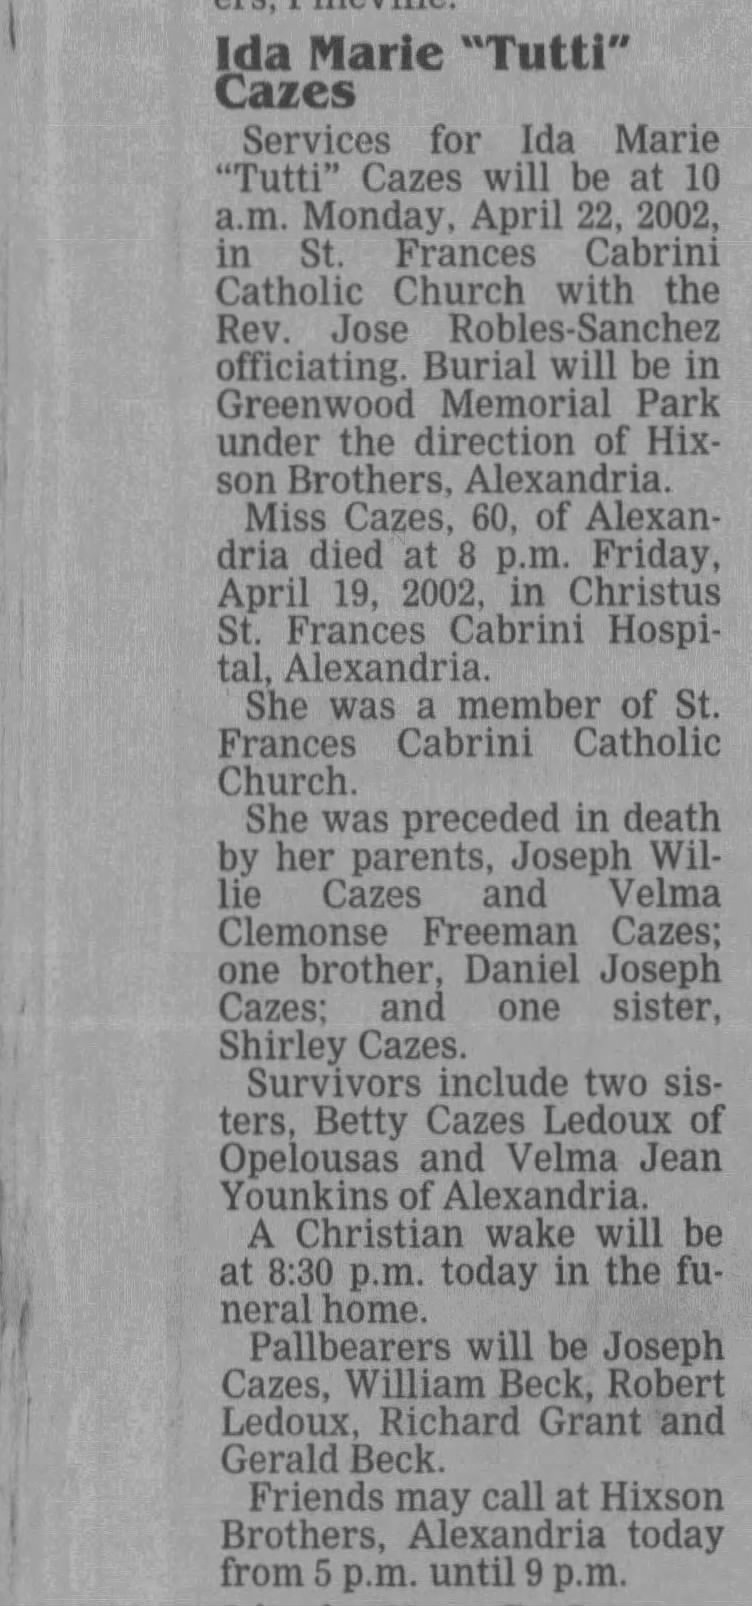 Death of Shirley Cazes' sister, Ida Cazes